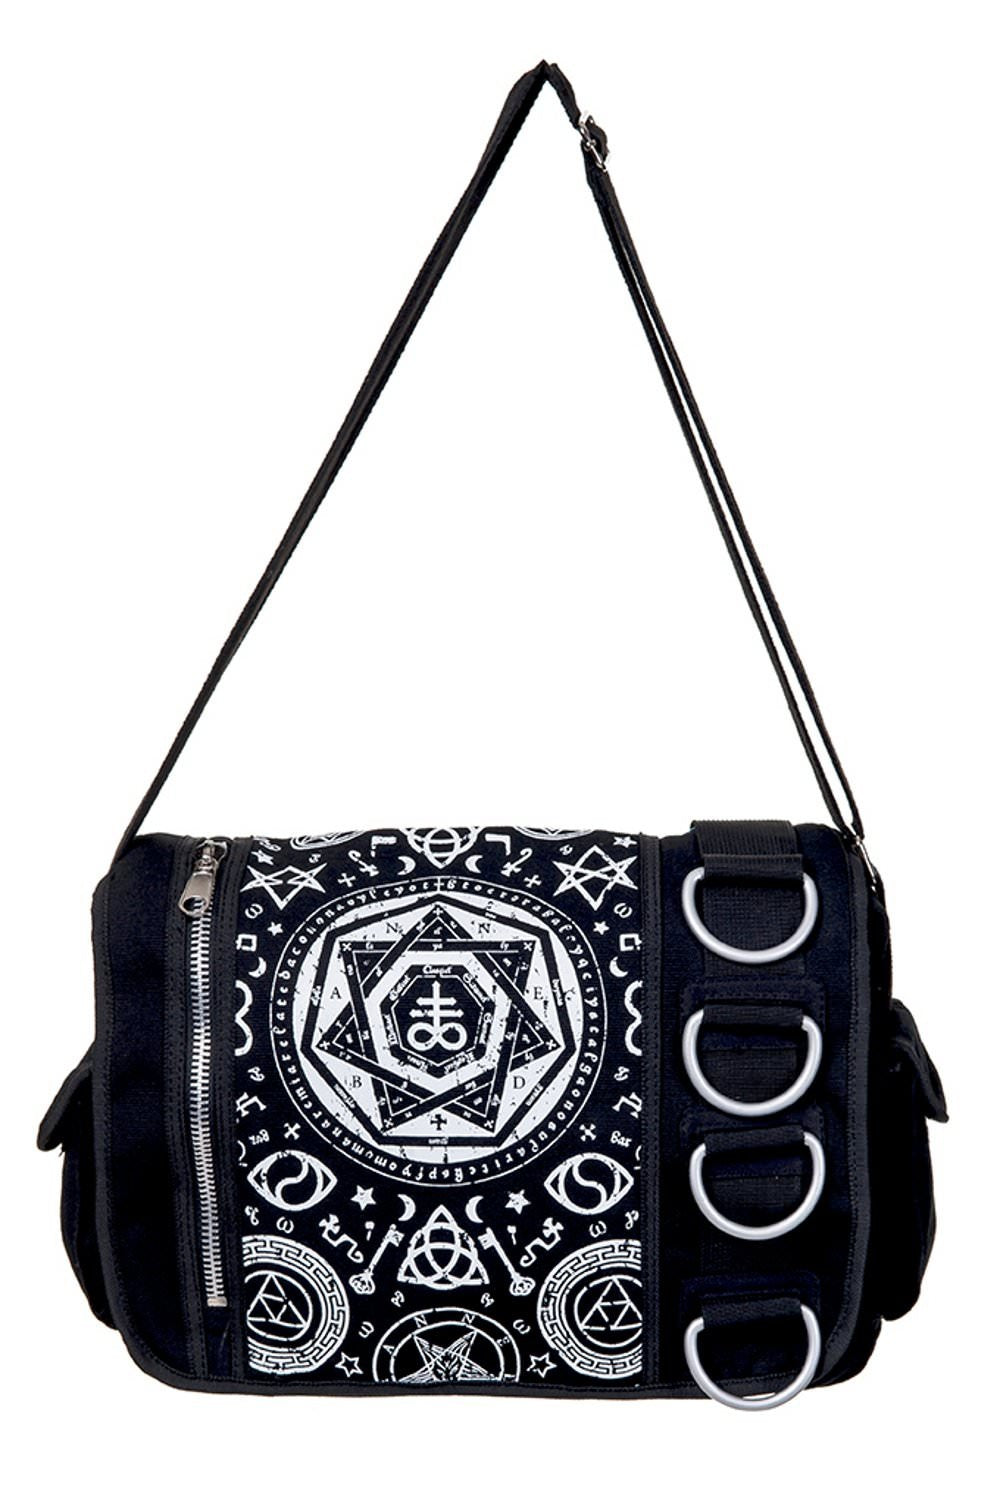 Banned Alternative Black Pentagram Messenger Bag